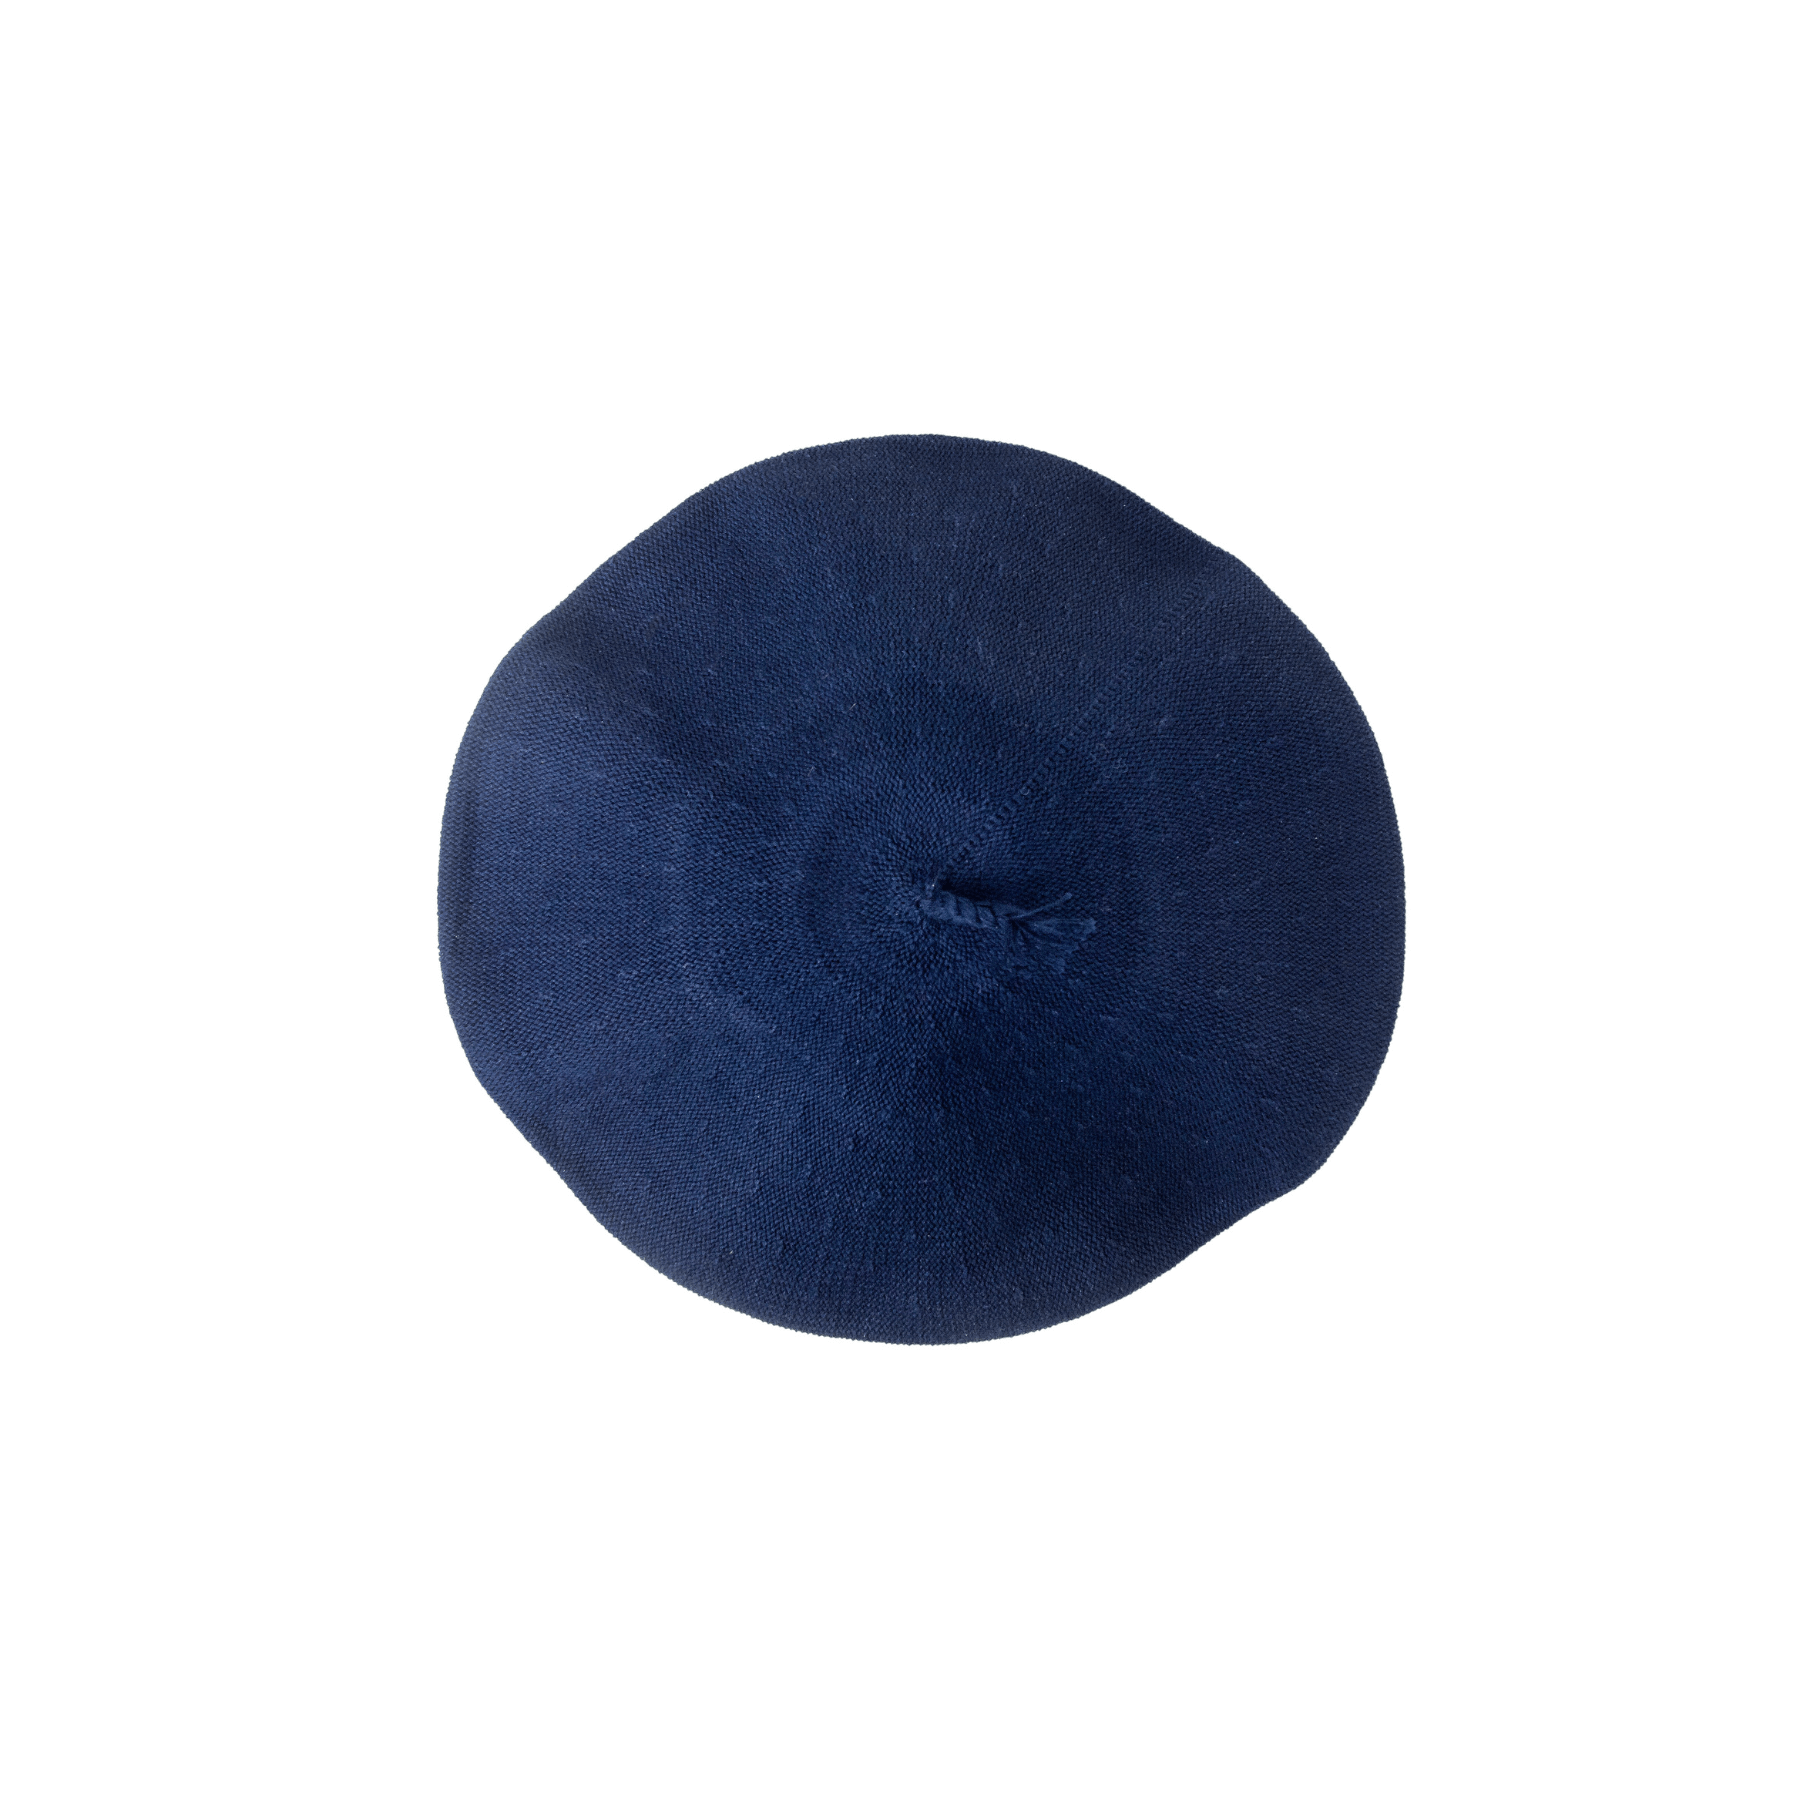 Gaucholife Beret Blue Cotton Thread Beret